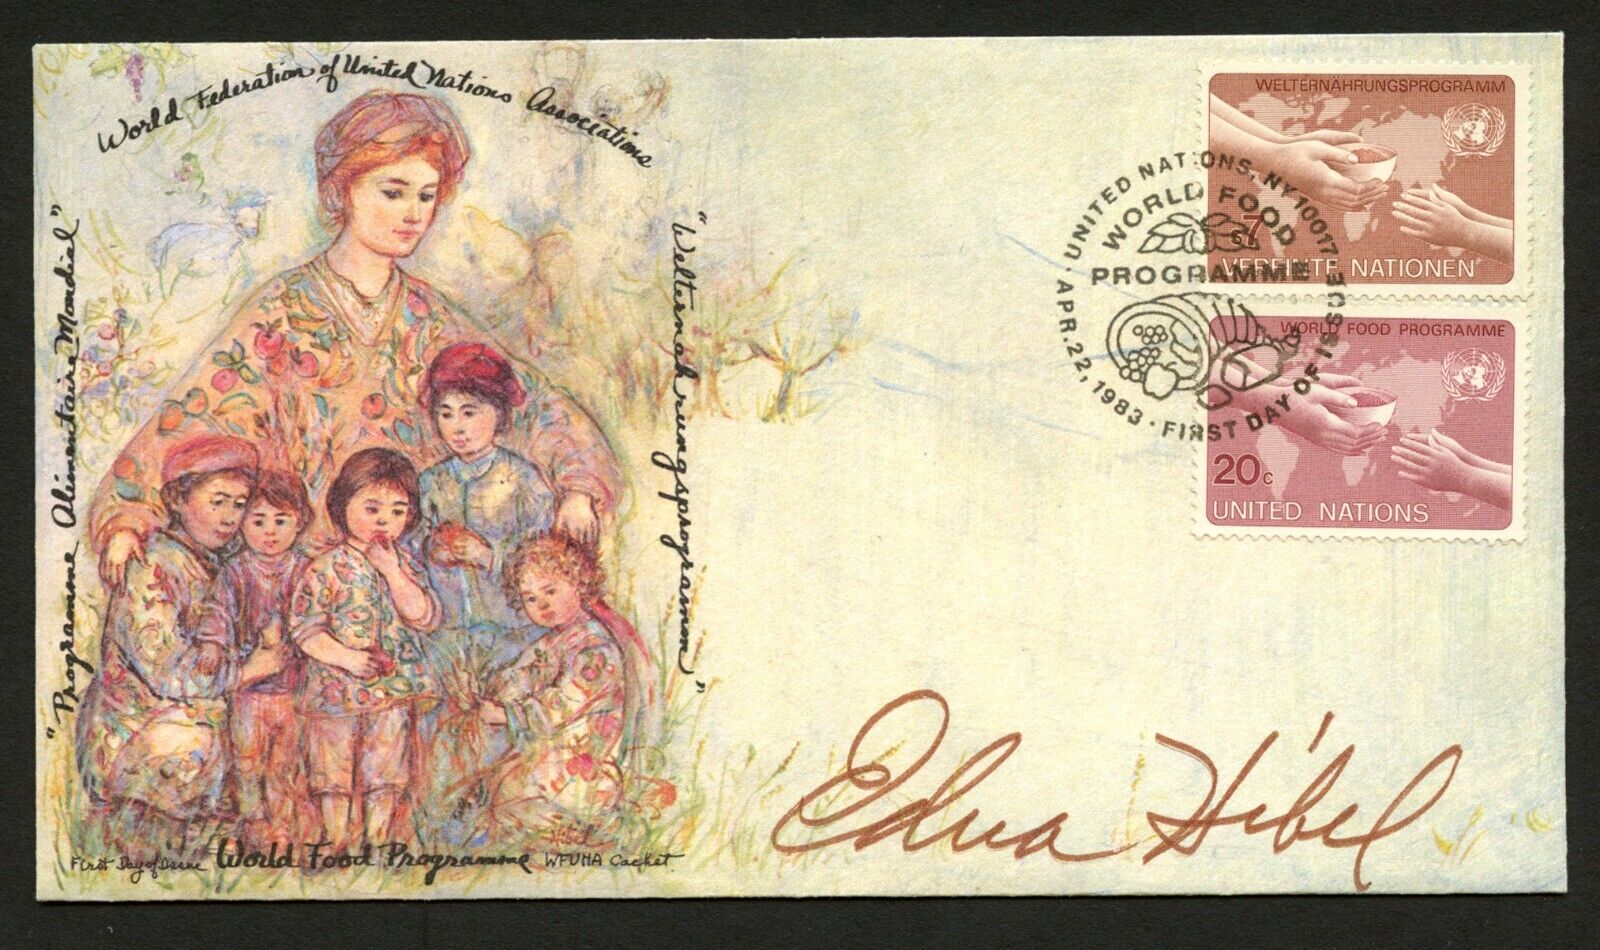 Edna Hibel d2014 signed autograph auto Postal Cover American Artist BAS